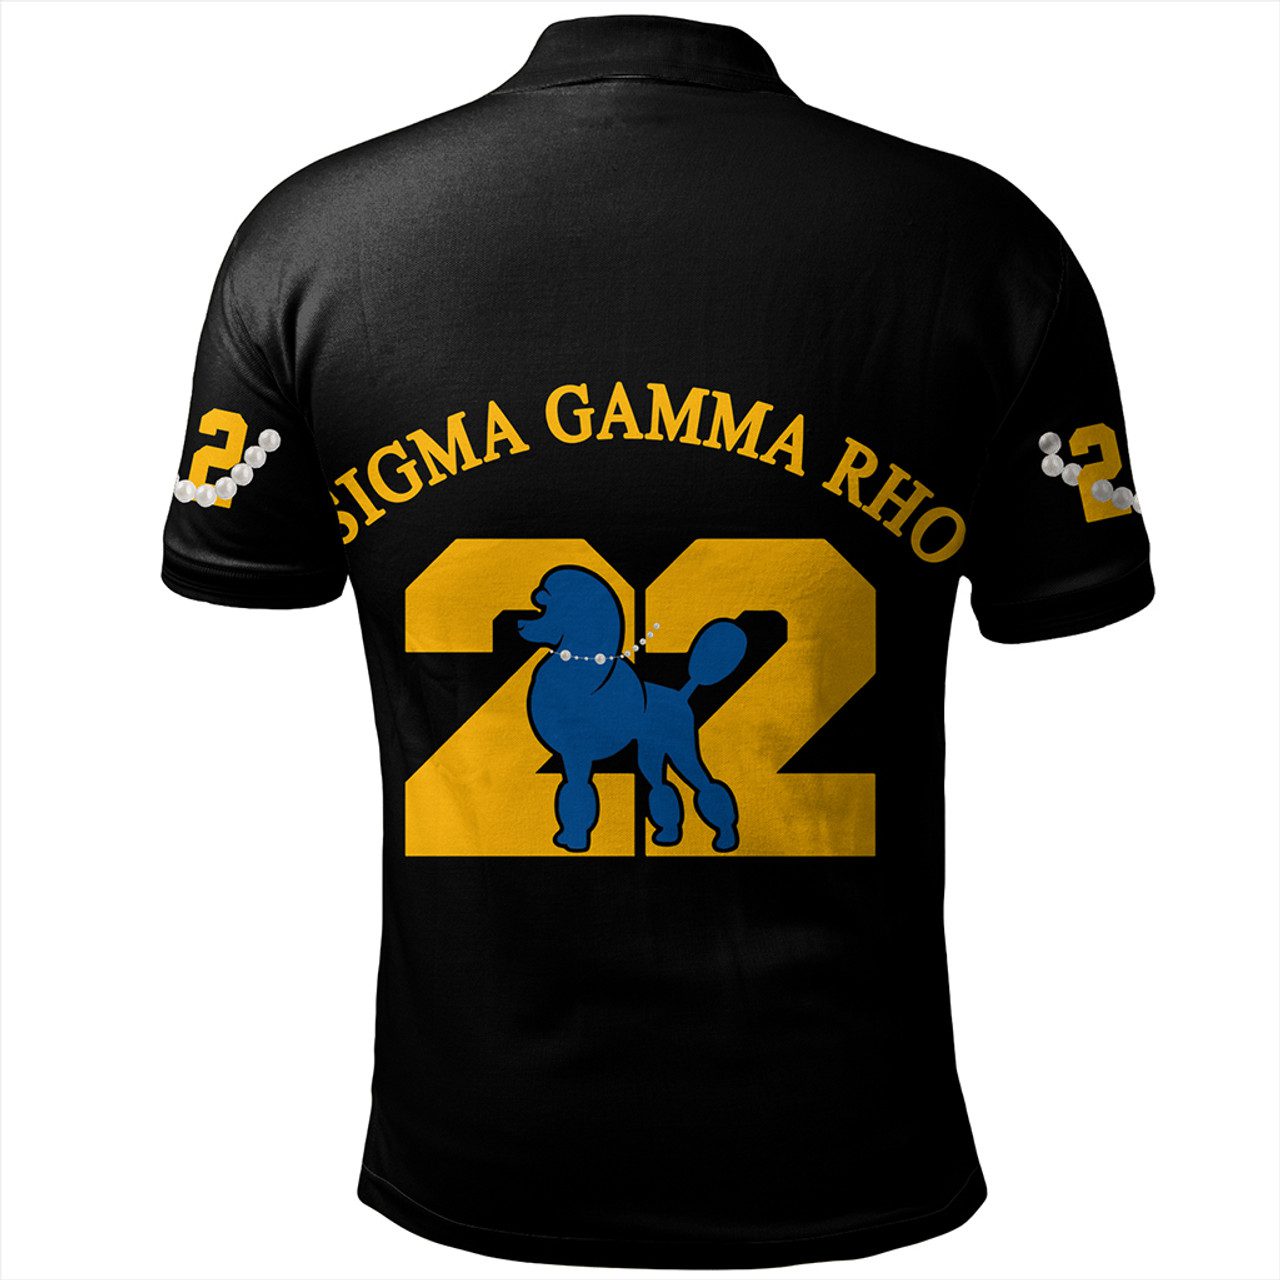 Sigma Gamma Rho Polo Shirt Pearls